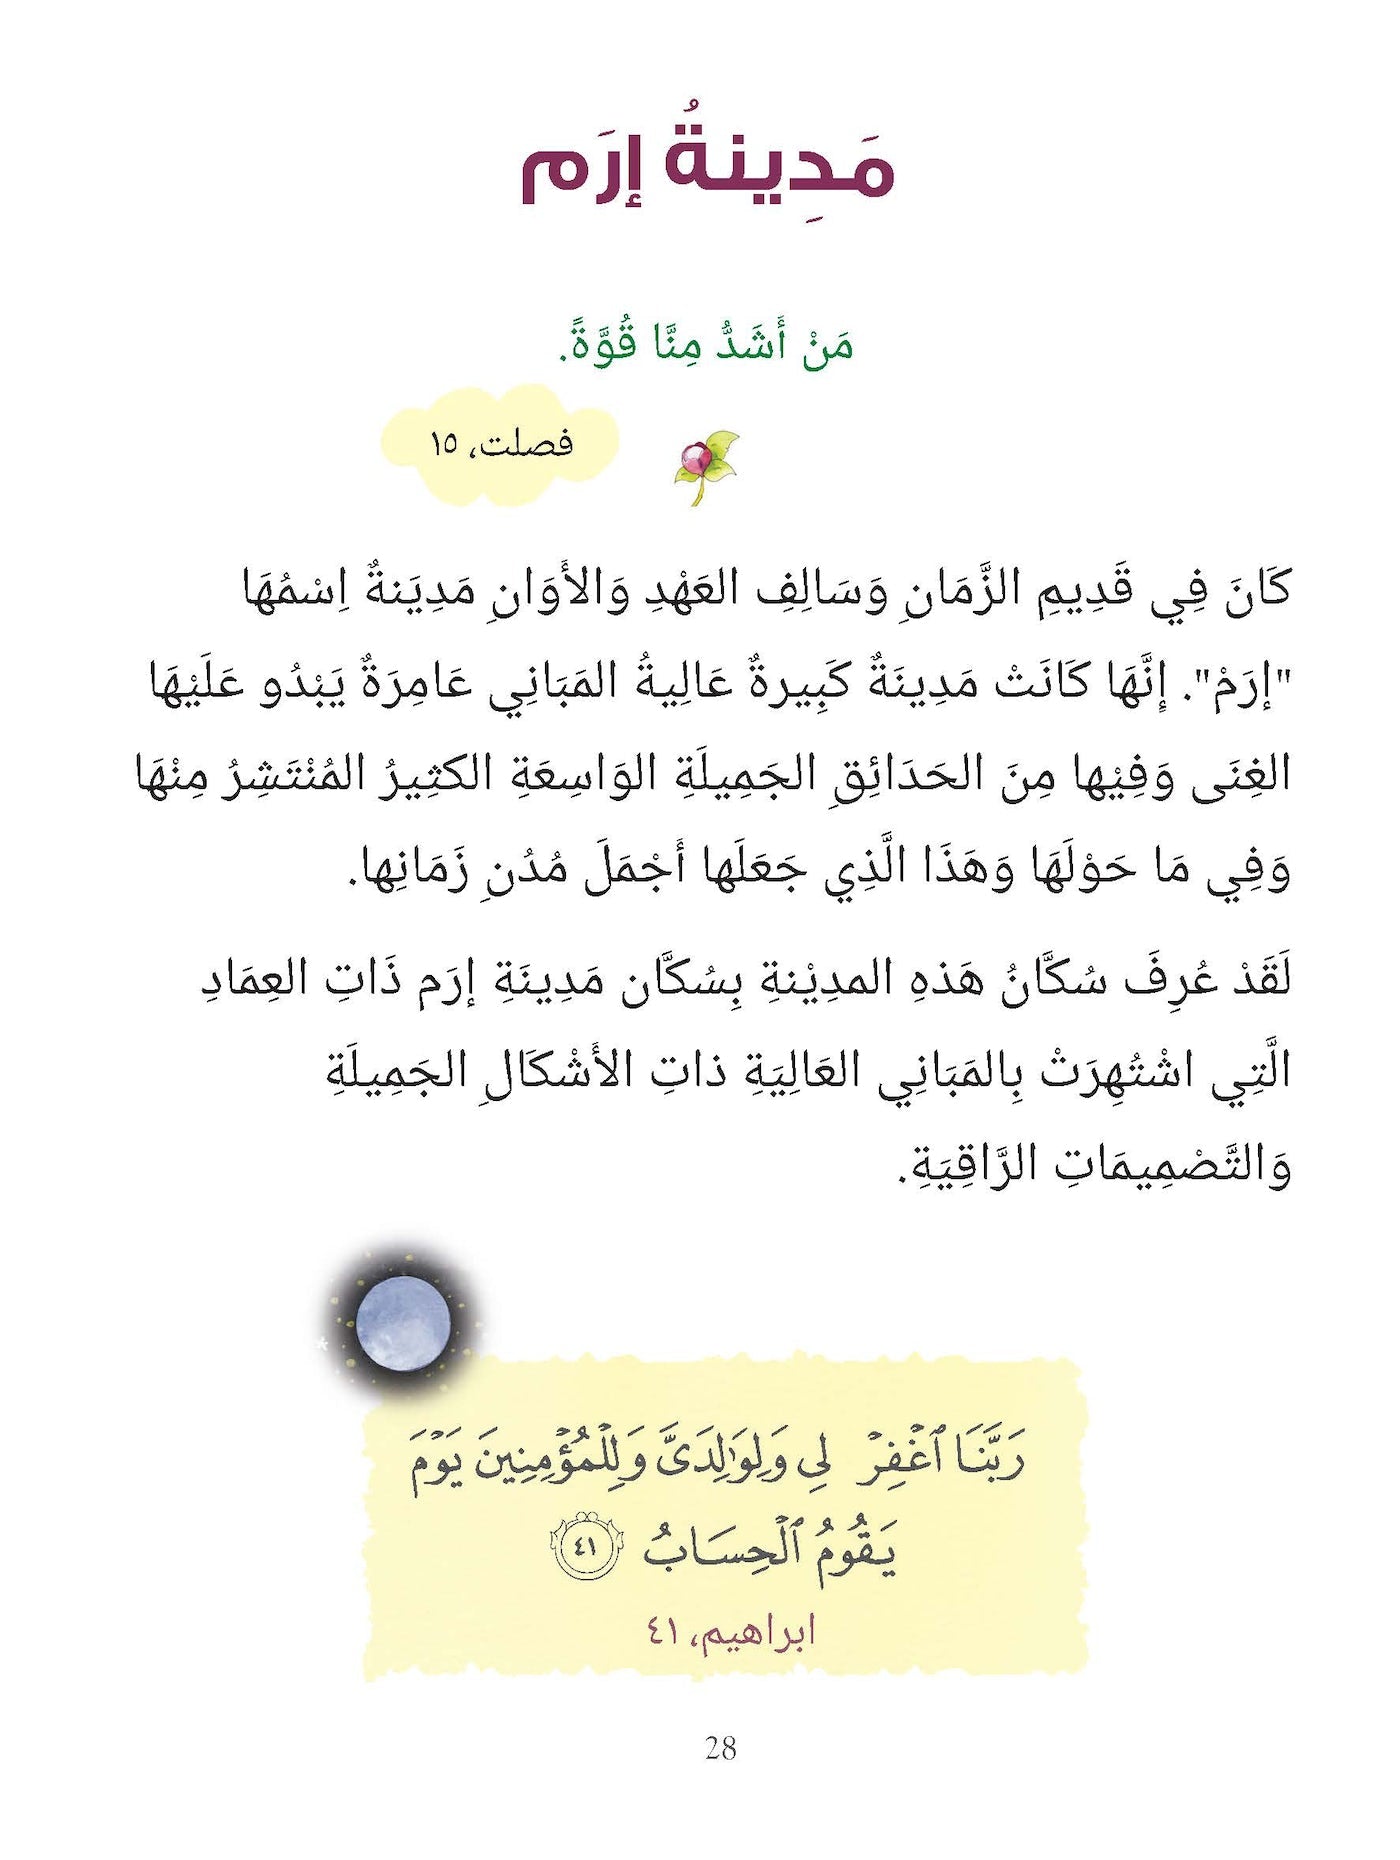 101 Sahabiyat Stories and Dua (Arabic) - ١٠١ قصص الصحابيات ودعاء